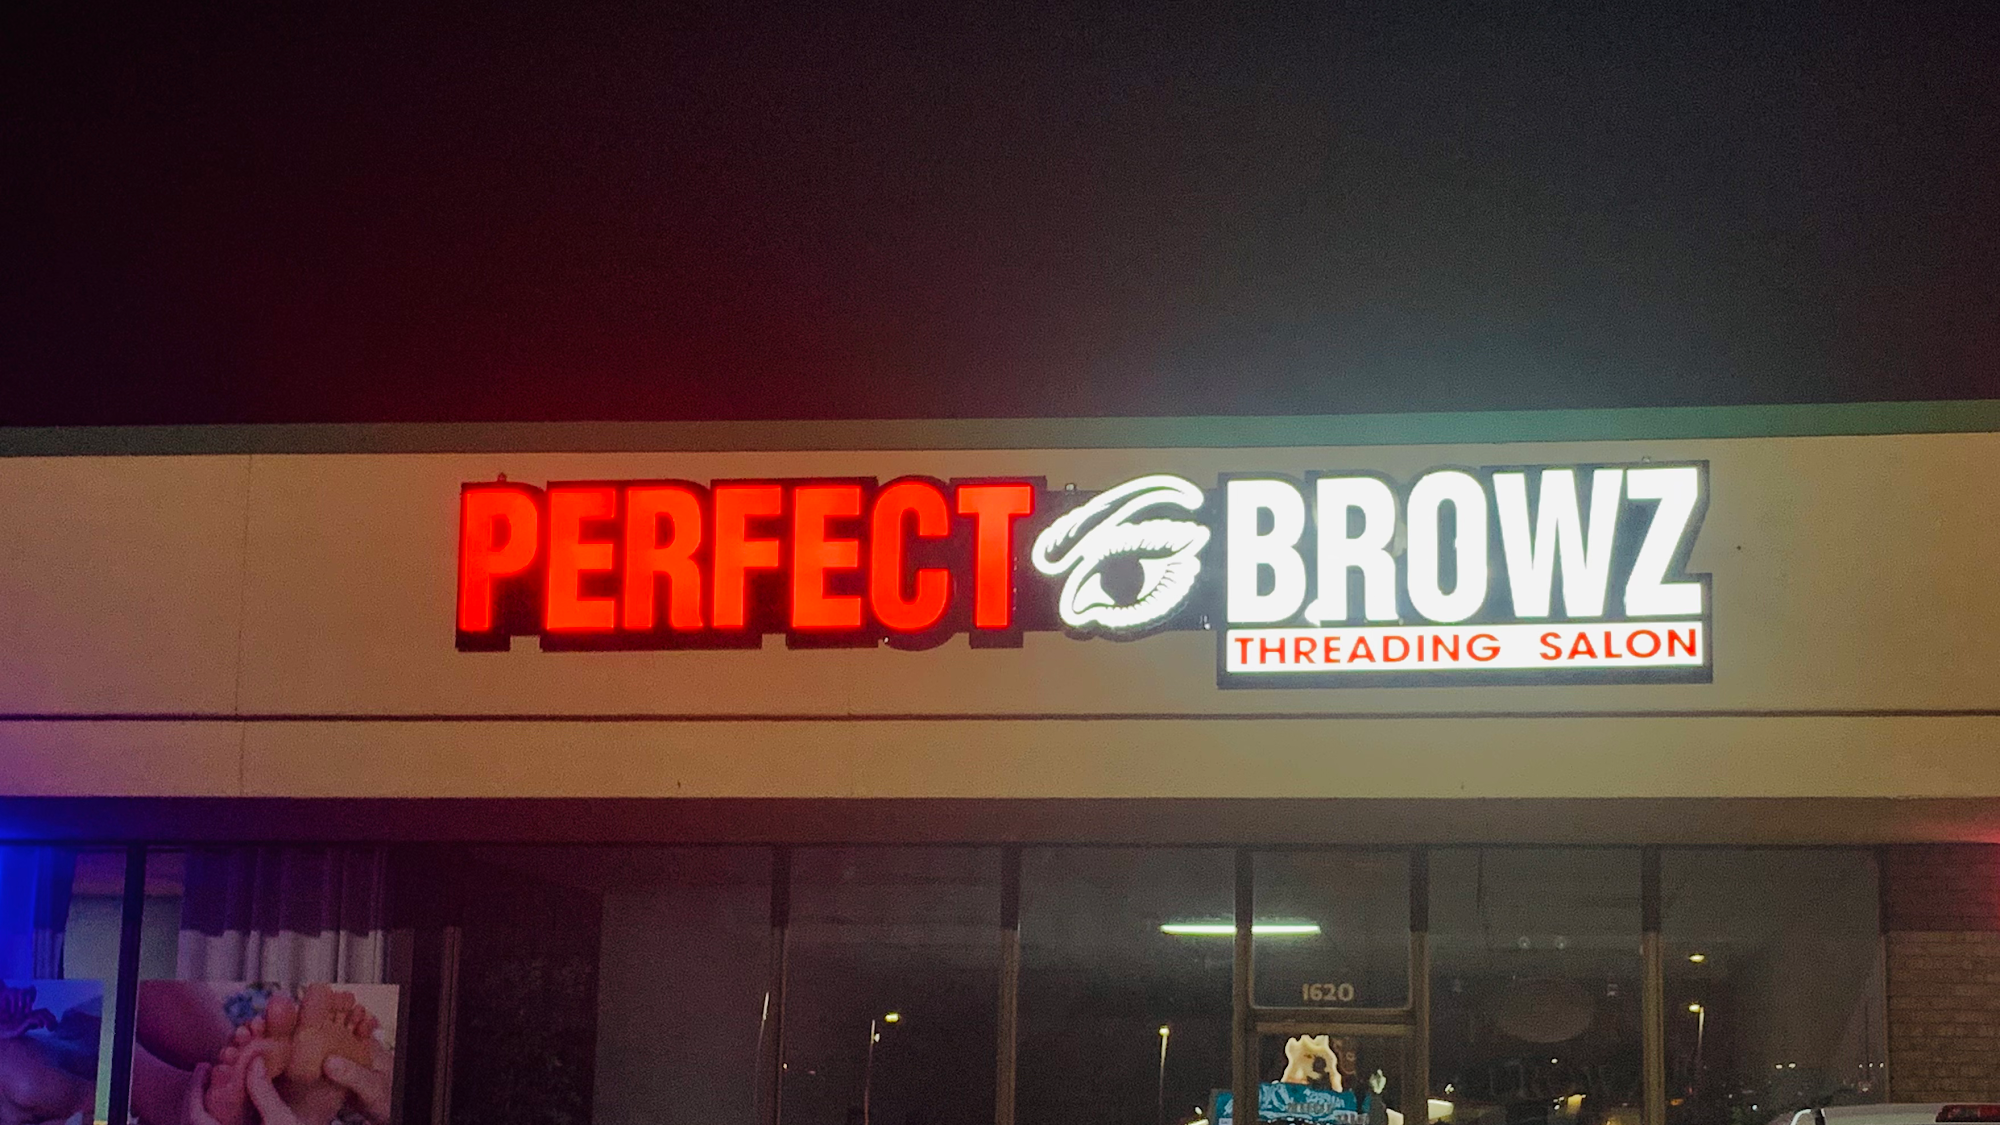 Perfect Browz ( Eyebrow Threading Salon)